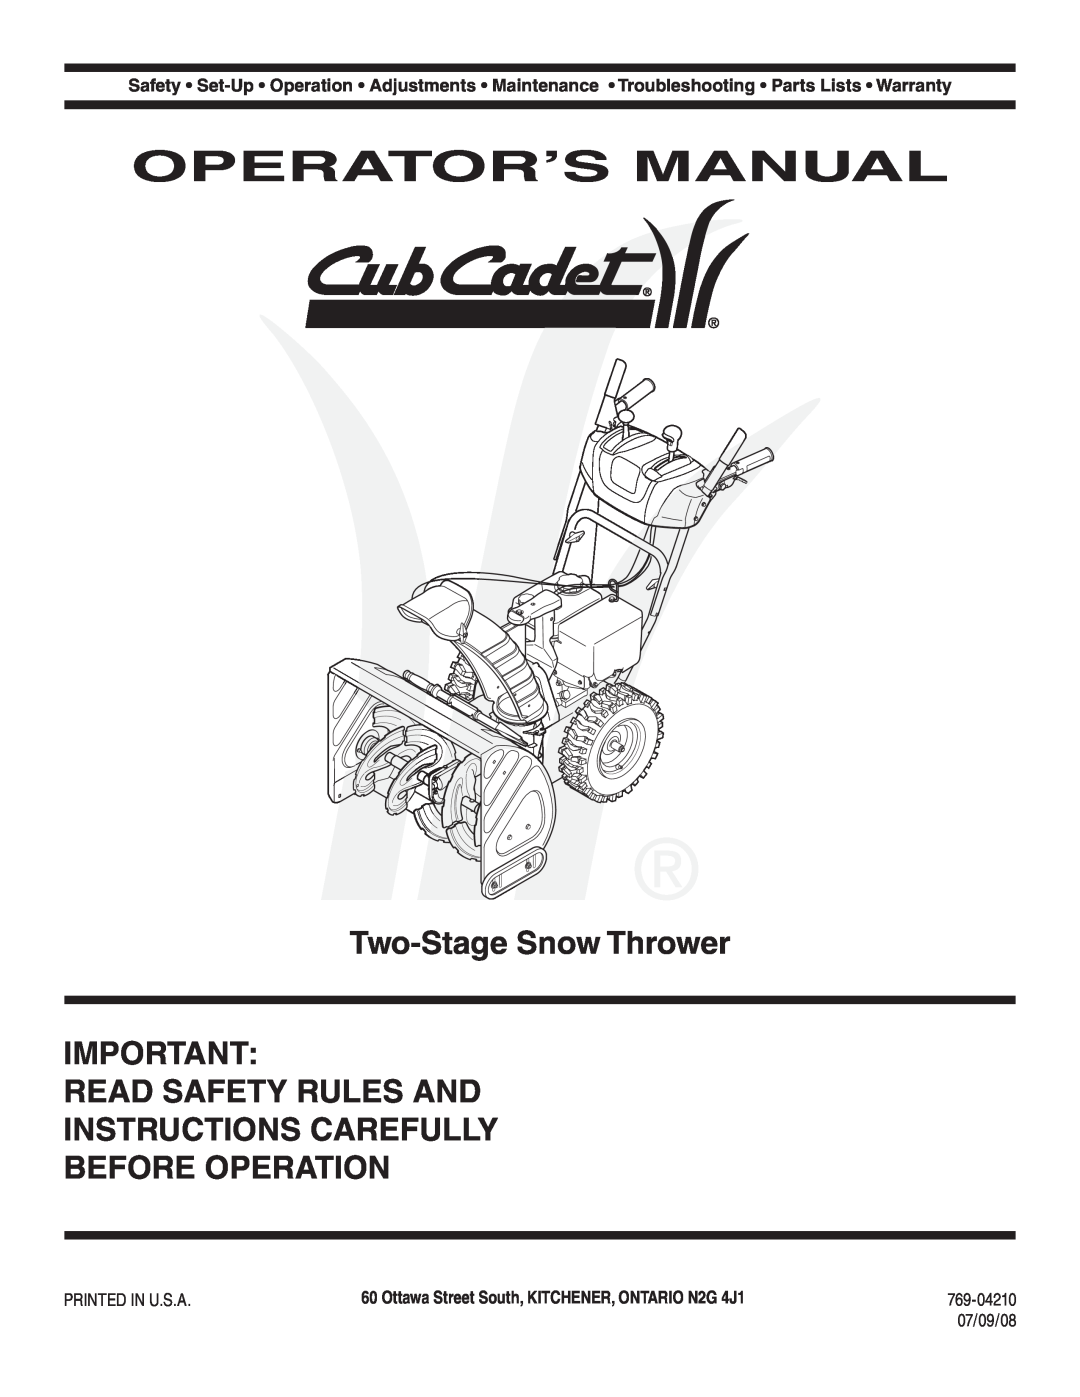 MTD 769-04210 warranty Operator’S Manual, Two-Stage Snow Thrower, Ottawa Street South, KITCHENER, ONTARIO N2G 4J1 